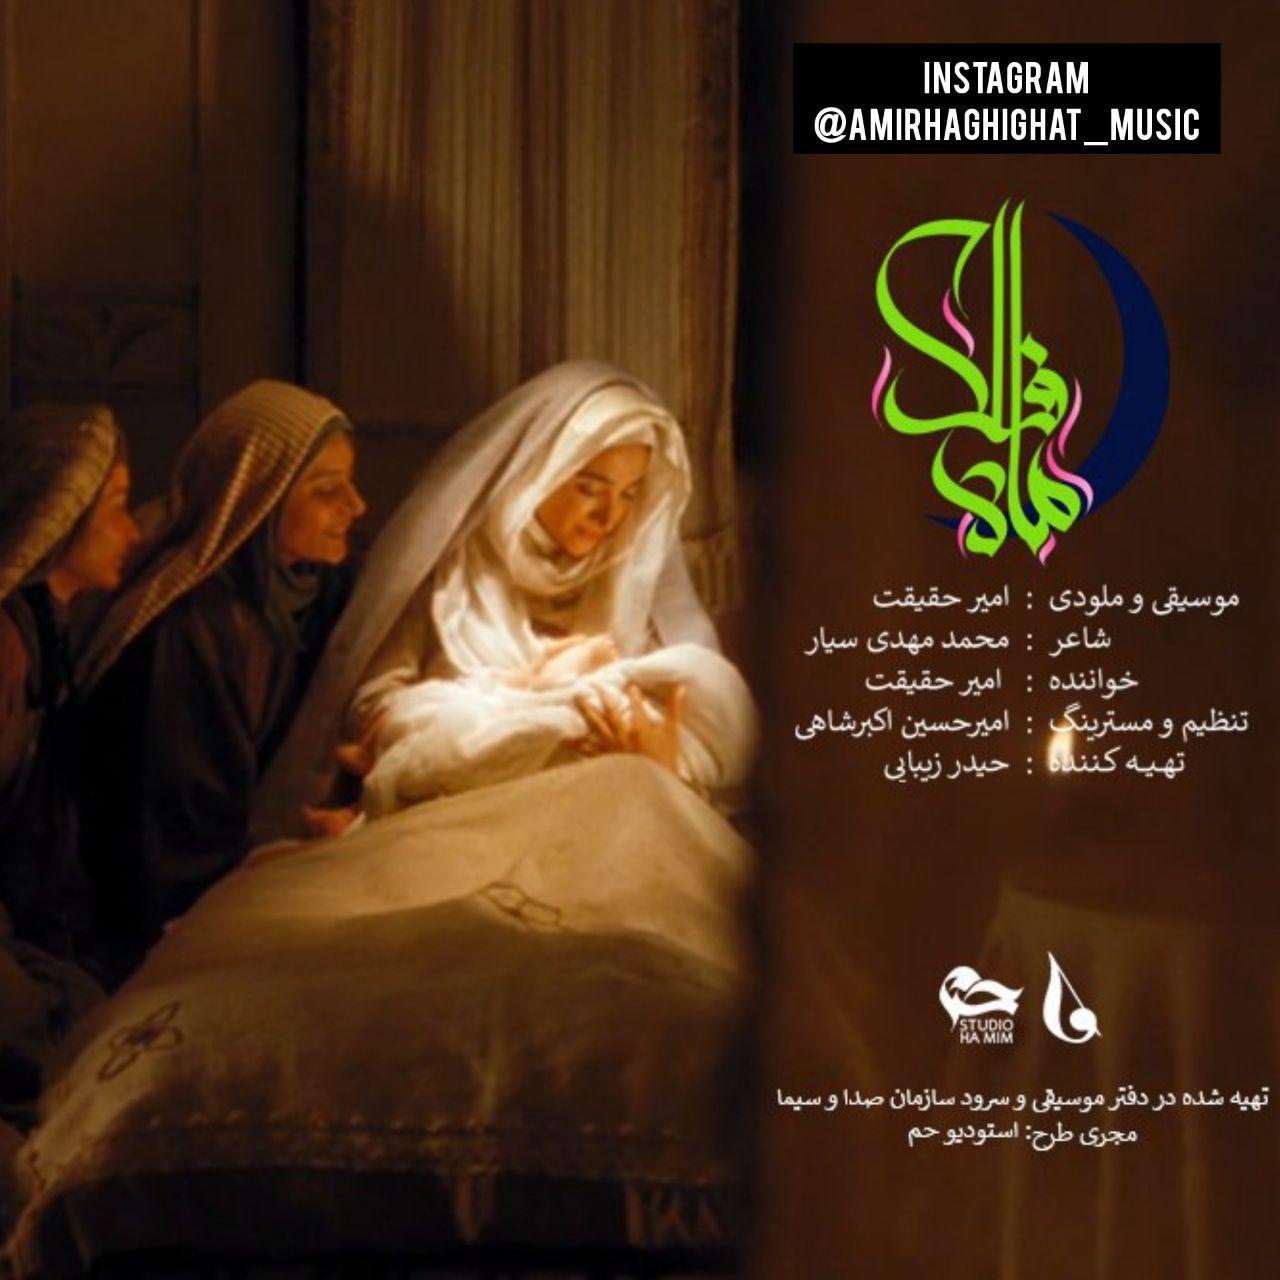  دانلود آهنگ جدید امیر حقیقت - ماه فلک | Download New Music By Amir Haghighat - Mahe Falak